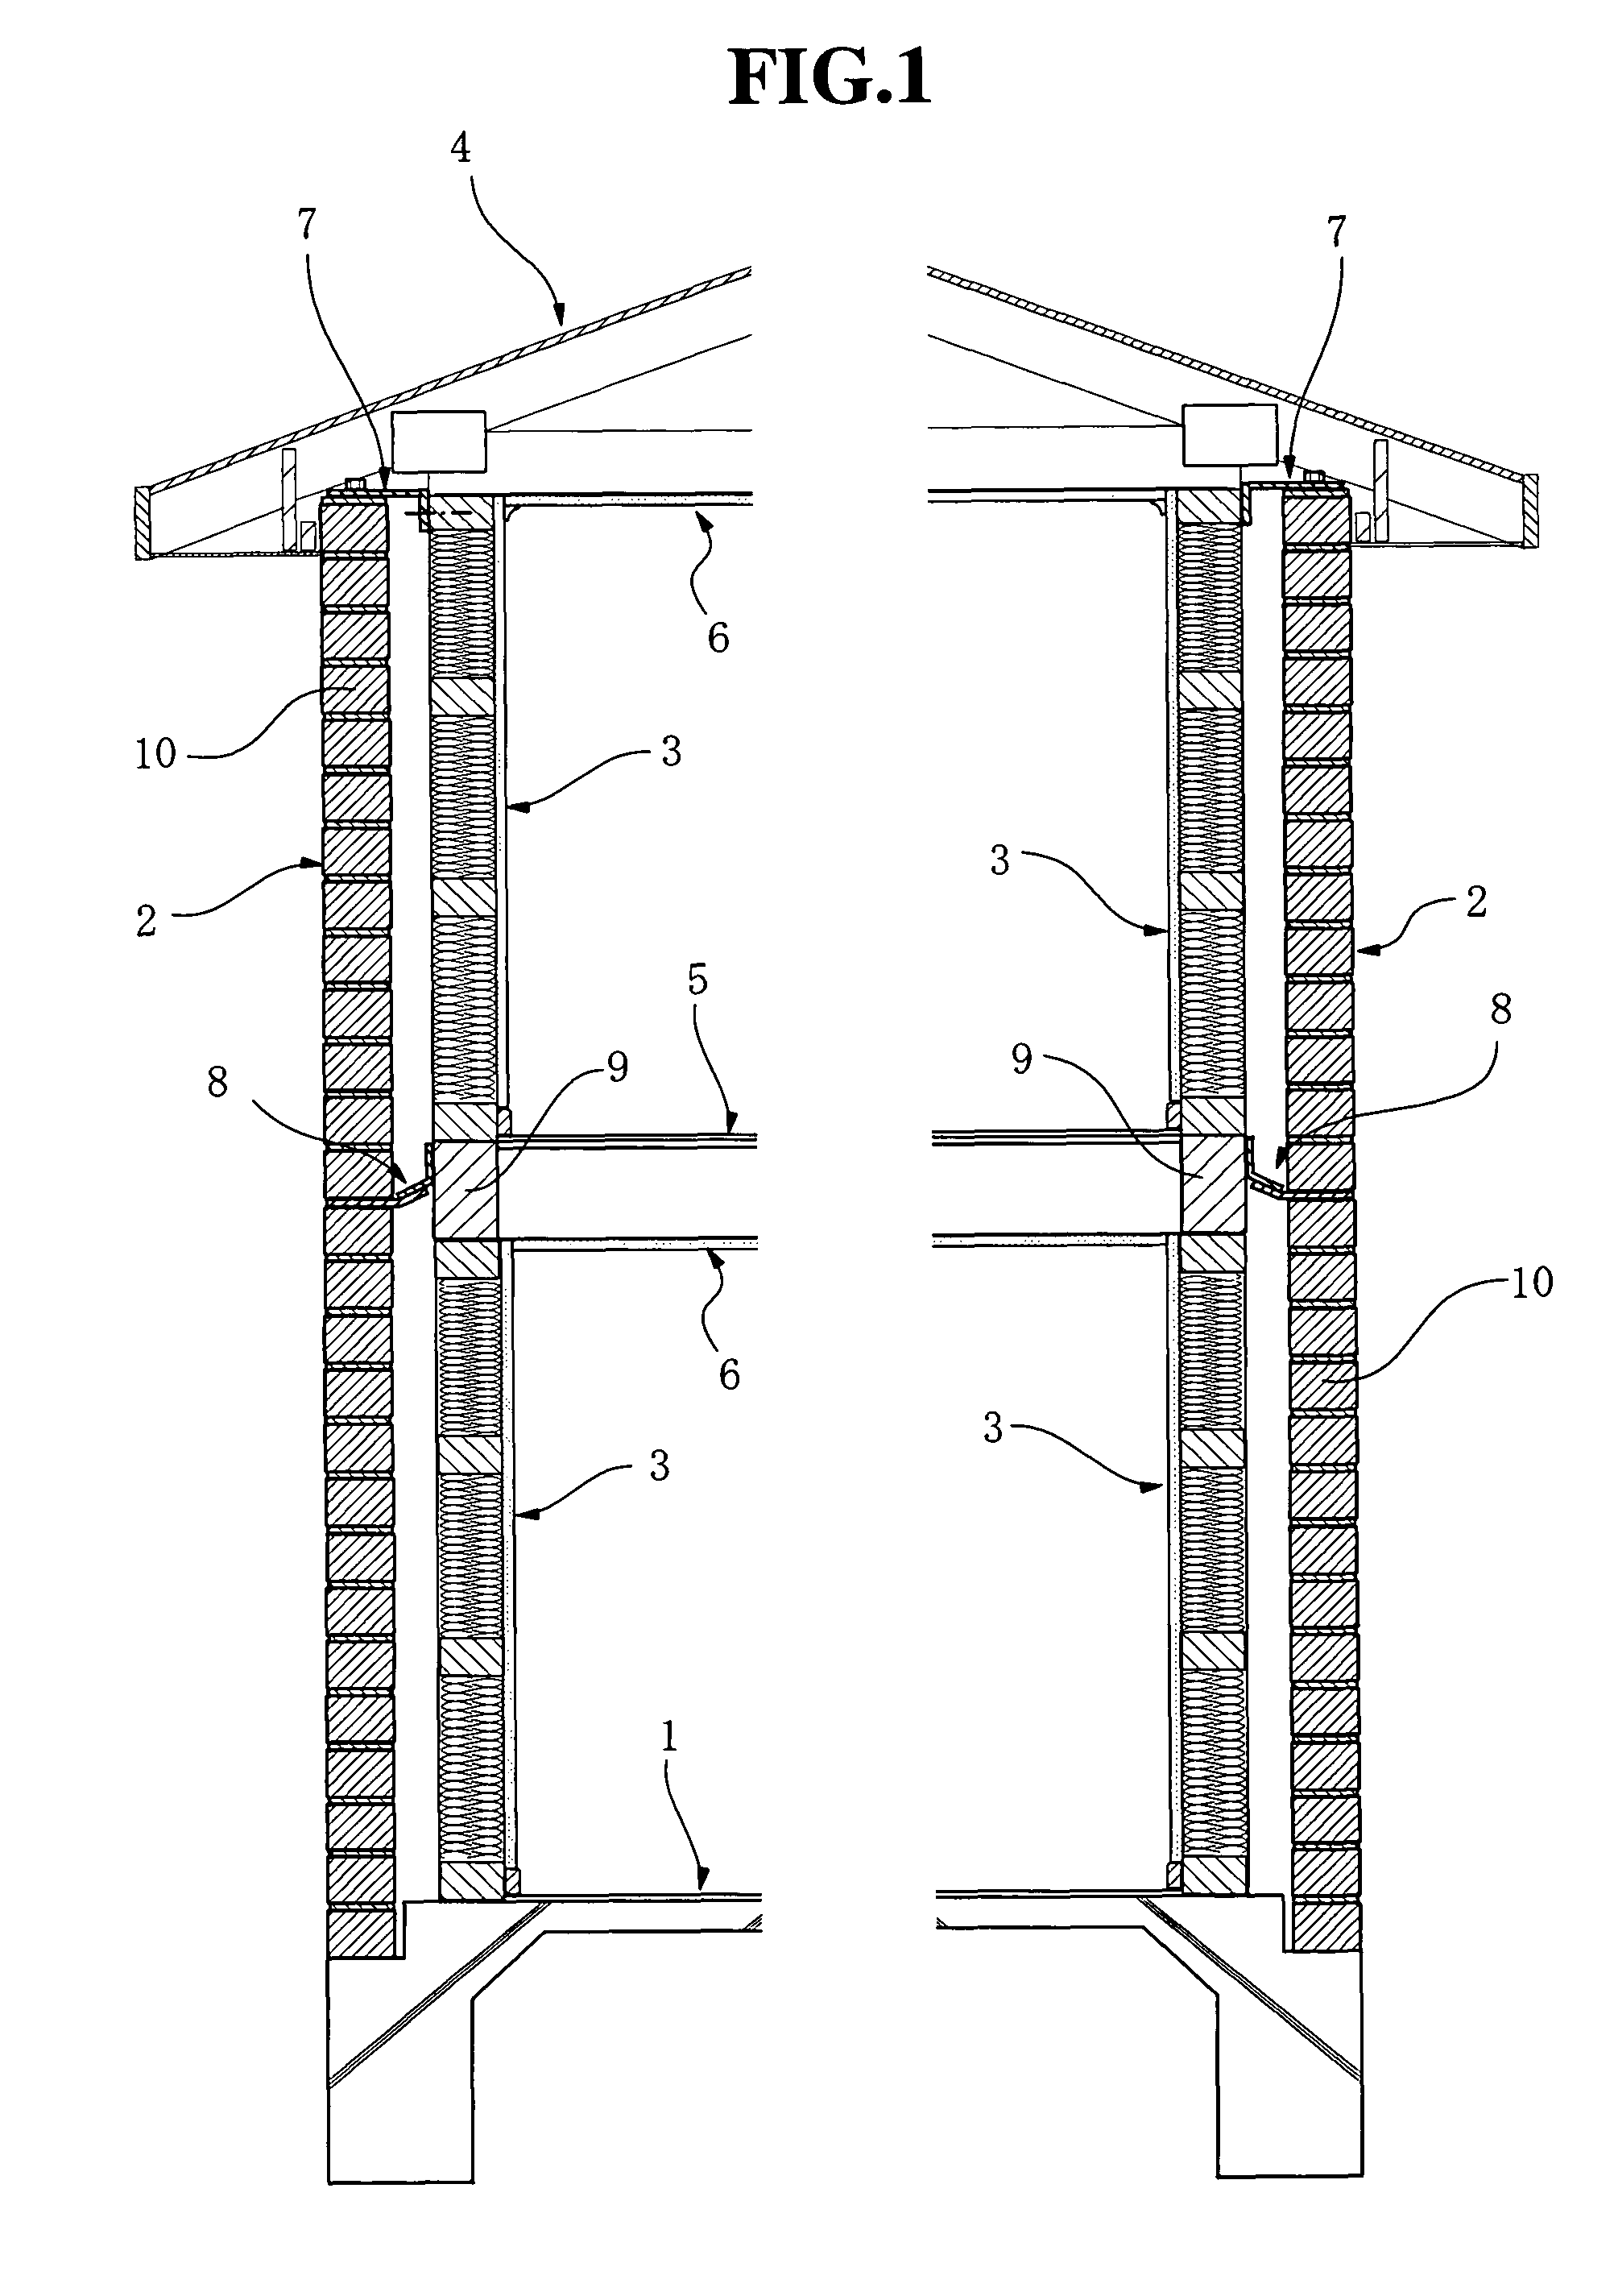 Method for forming masonry unit